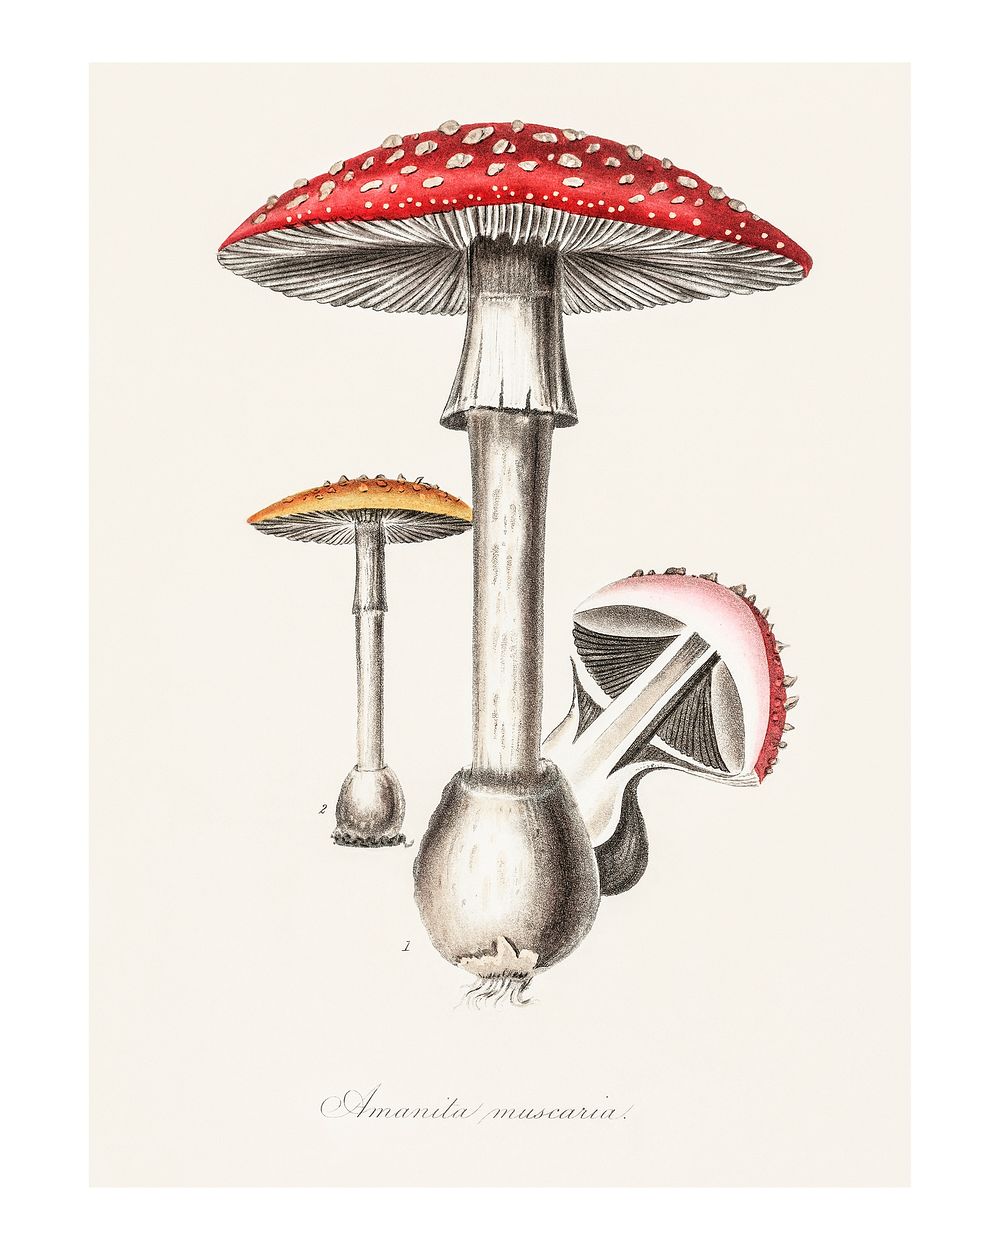 Fly agaric mushroom vintage illustration wall art print and poster design remix from original artwork.